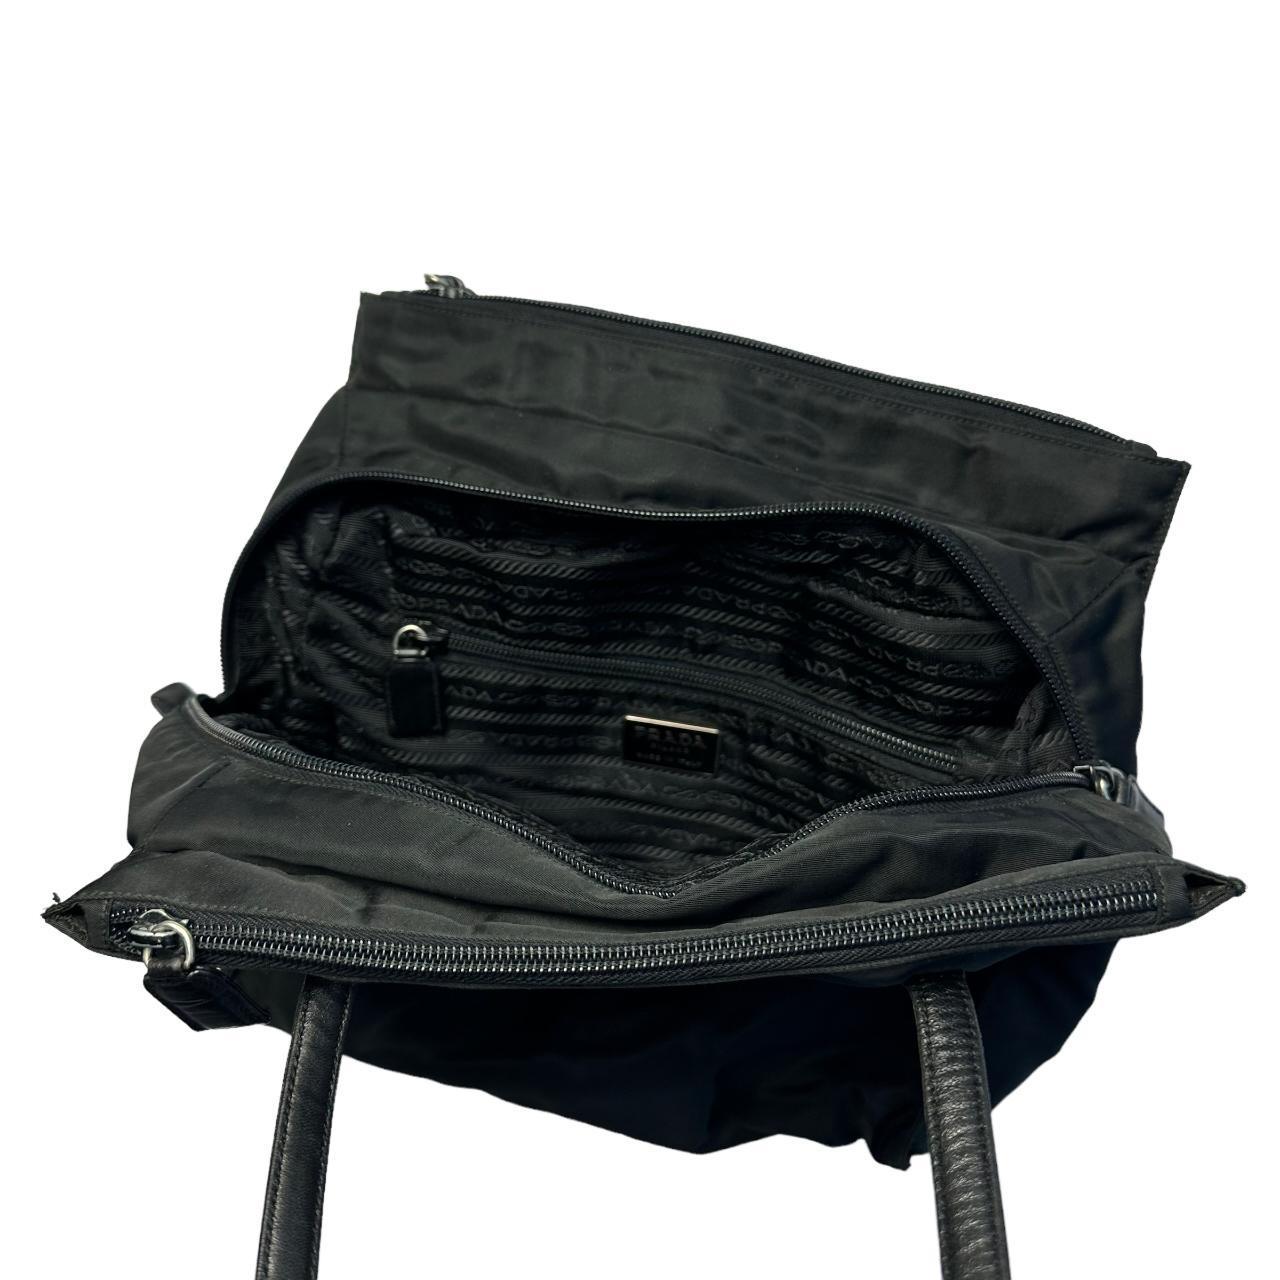 Prada nylon Black tote bag - Known Source